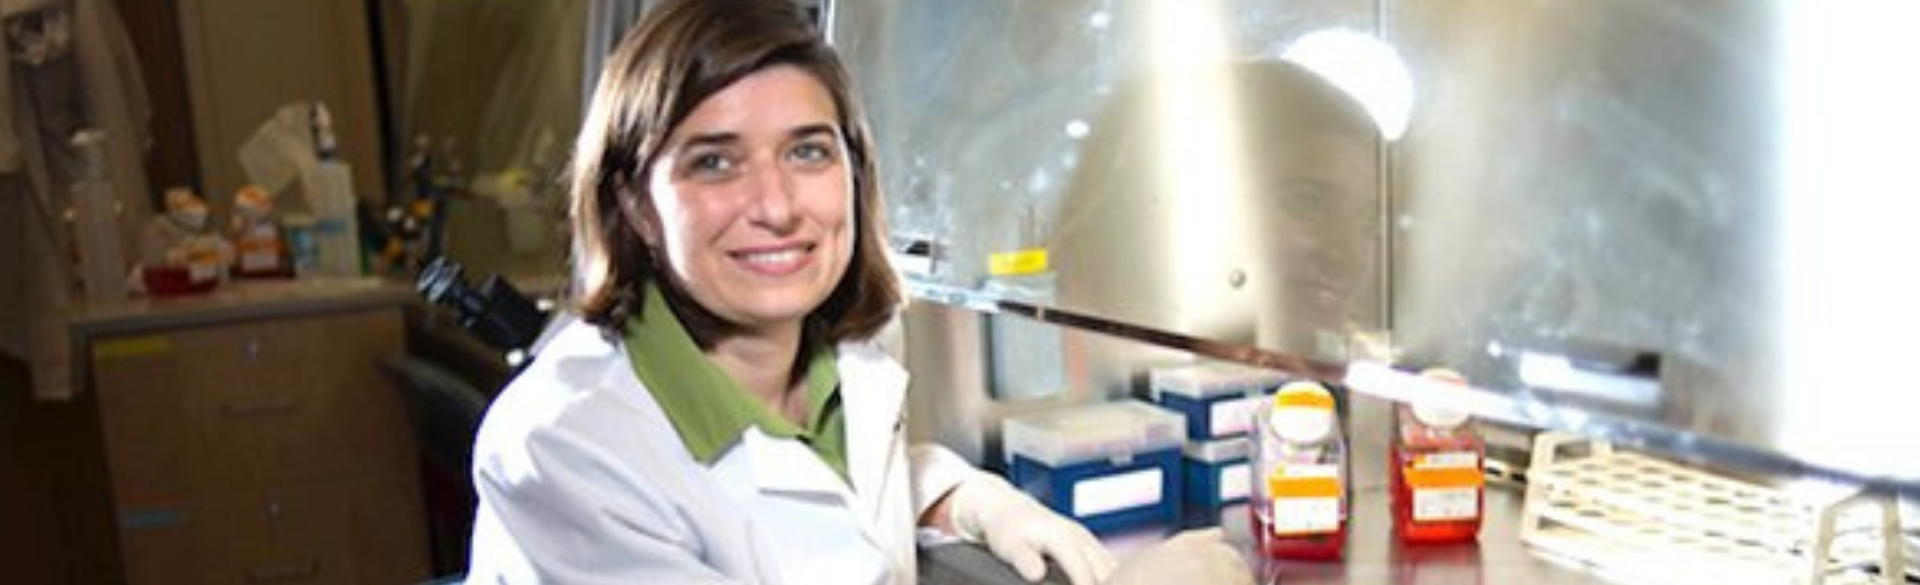 Canto-Soler brings visionary aspirations to Gates Center for Regenerative Medicine